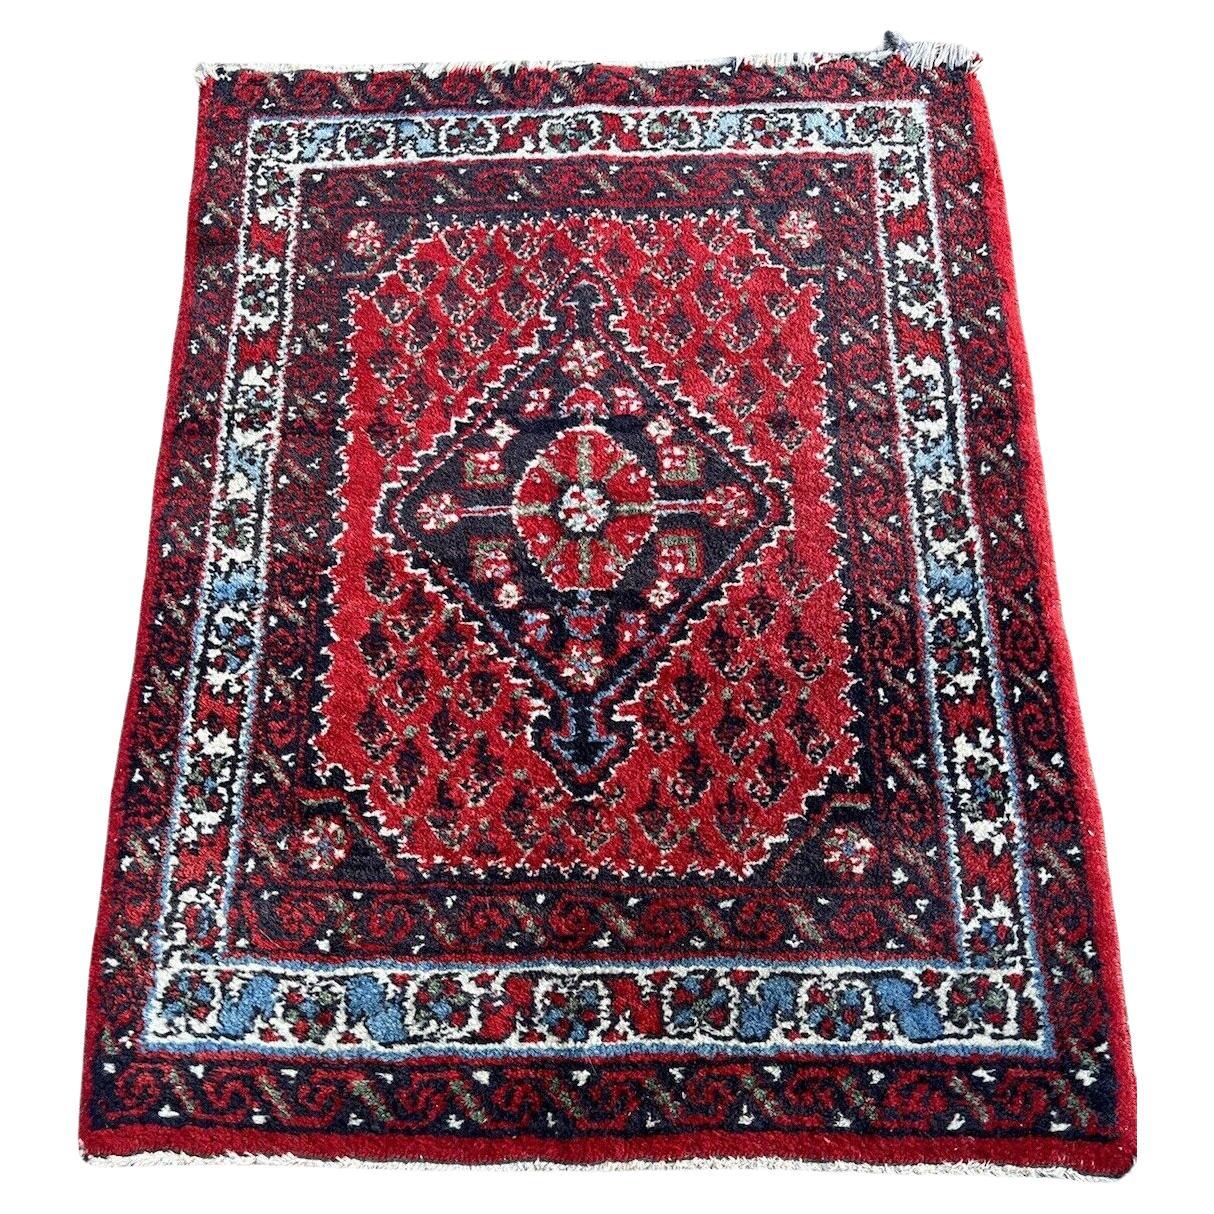 Handmade Vintage Persian Style Hamadan Rug 2.1' x 2.9', 1970s - 1S35